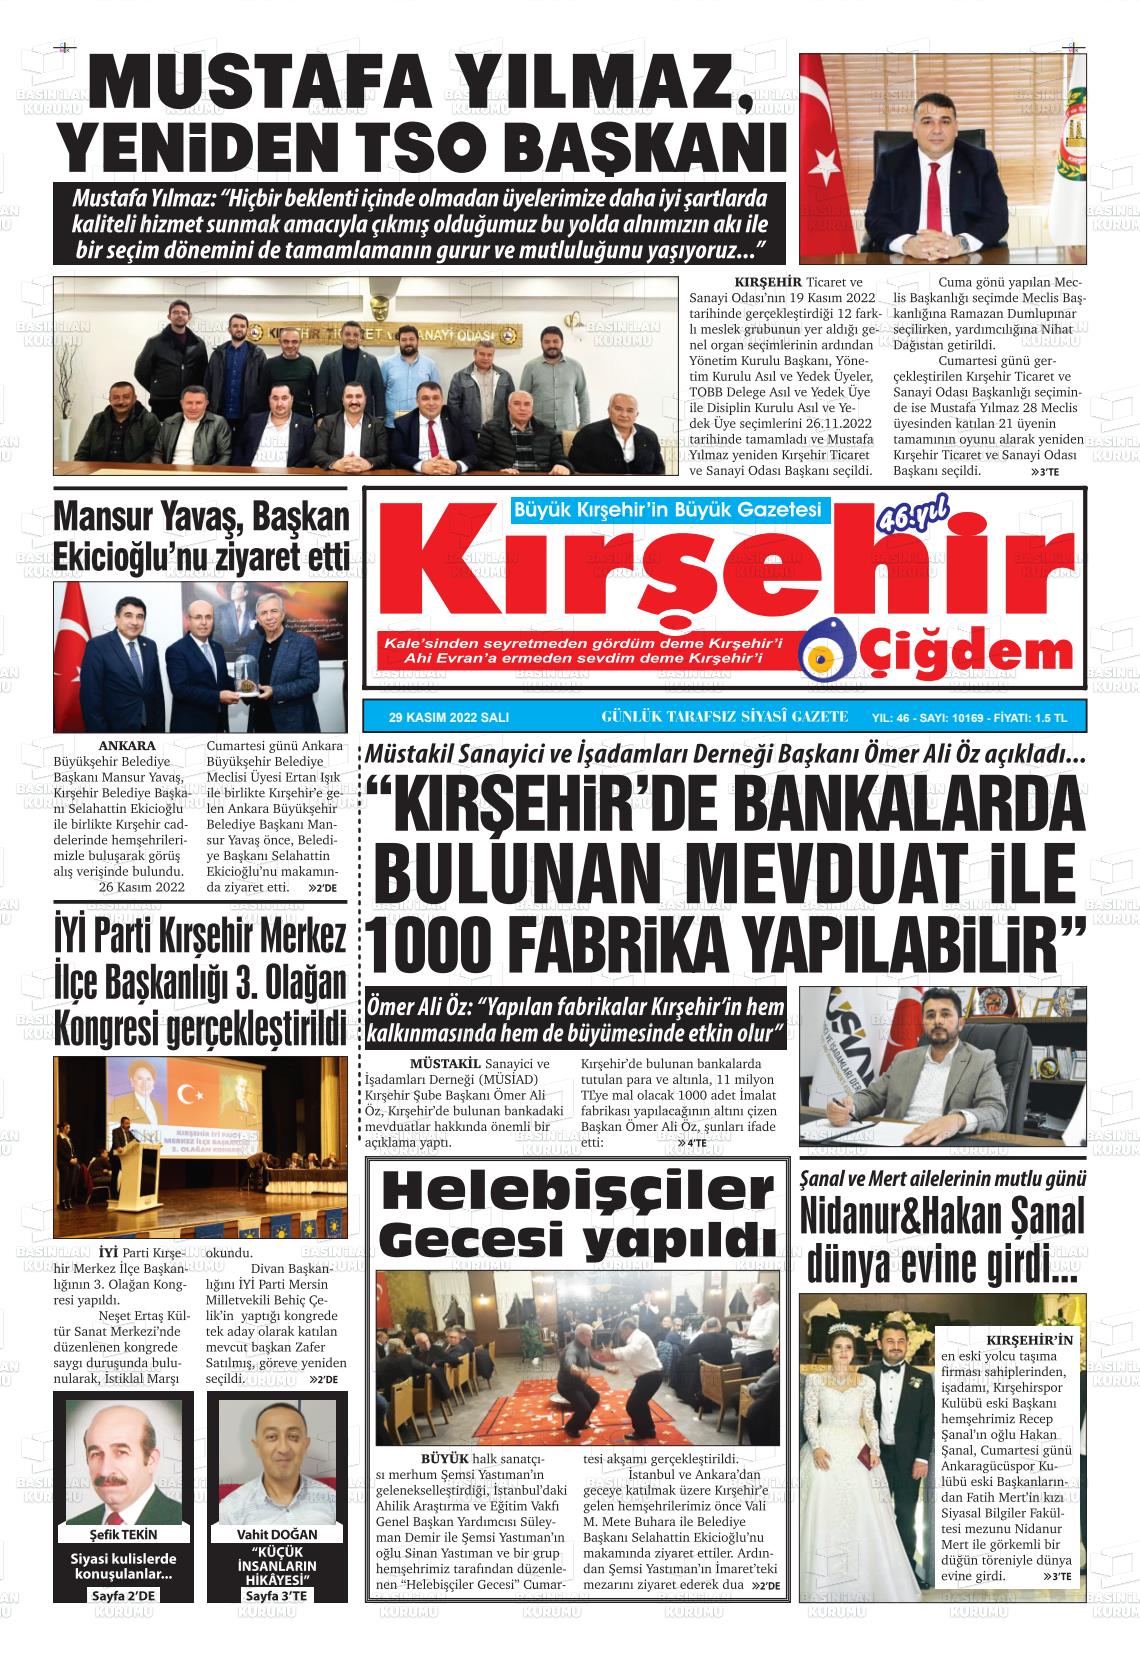 29 Kasım 2022 Kırşehir Çiğdem Gazete Manşeti